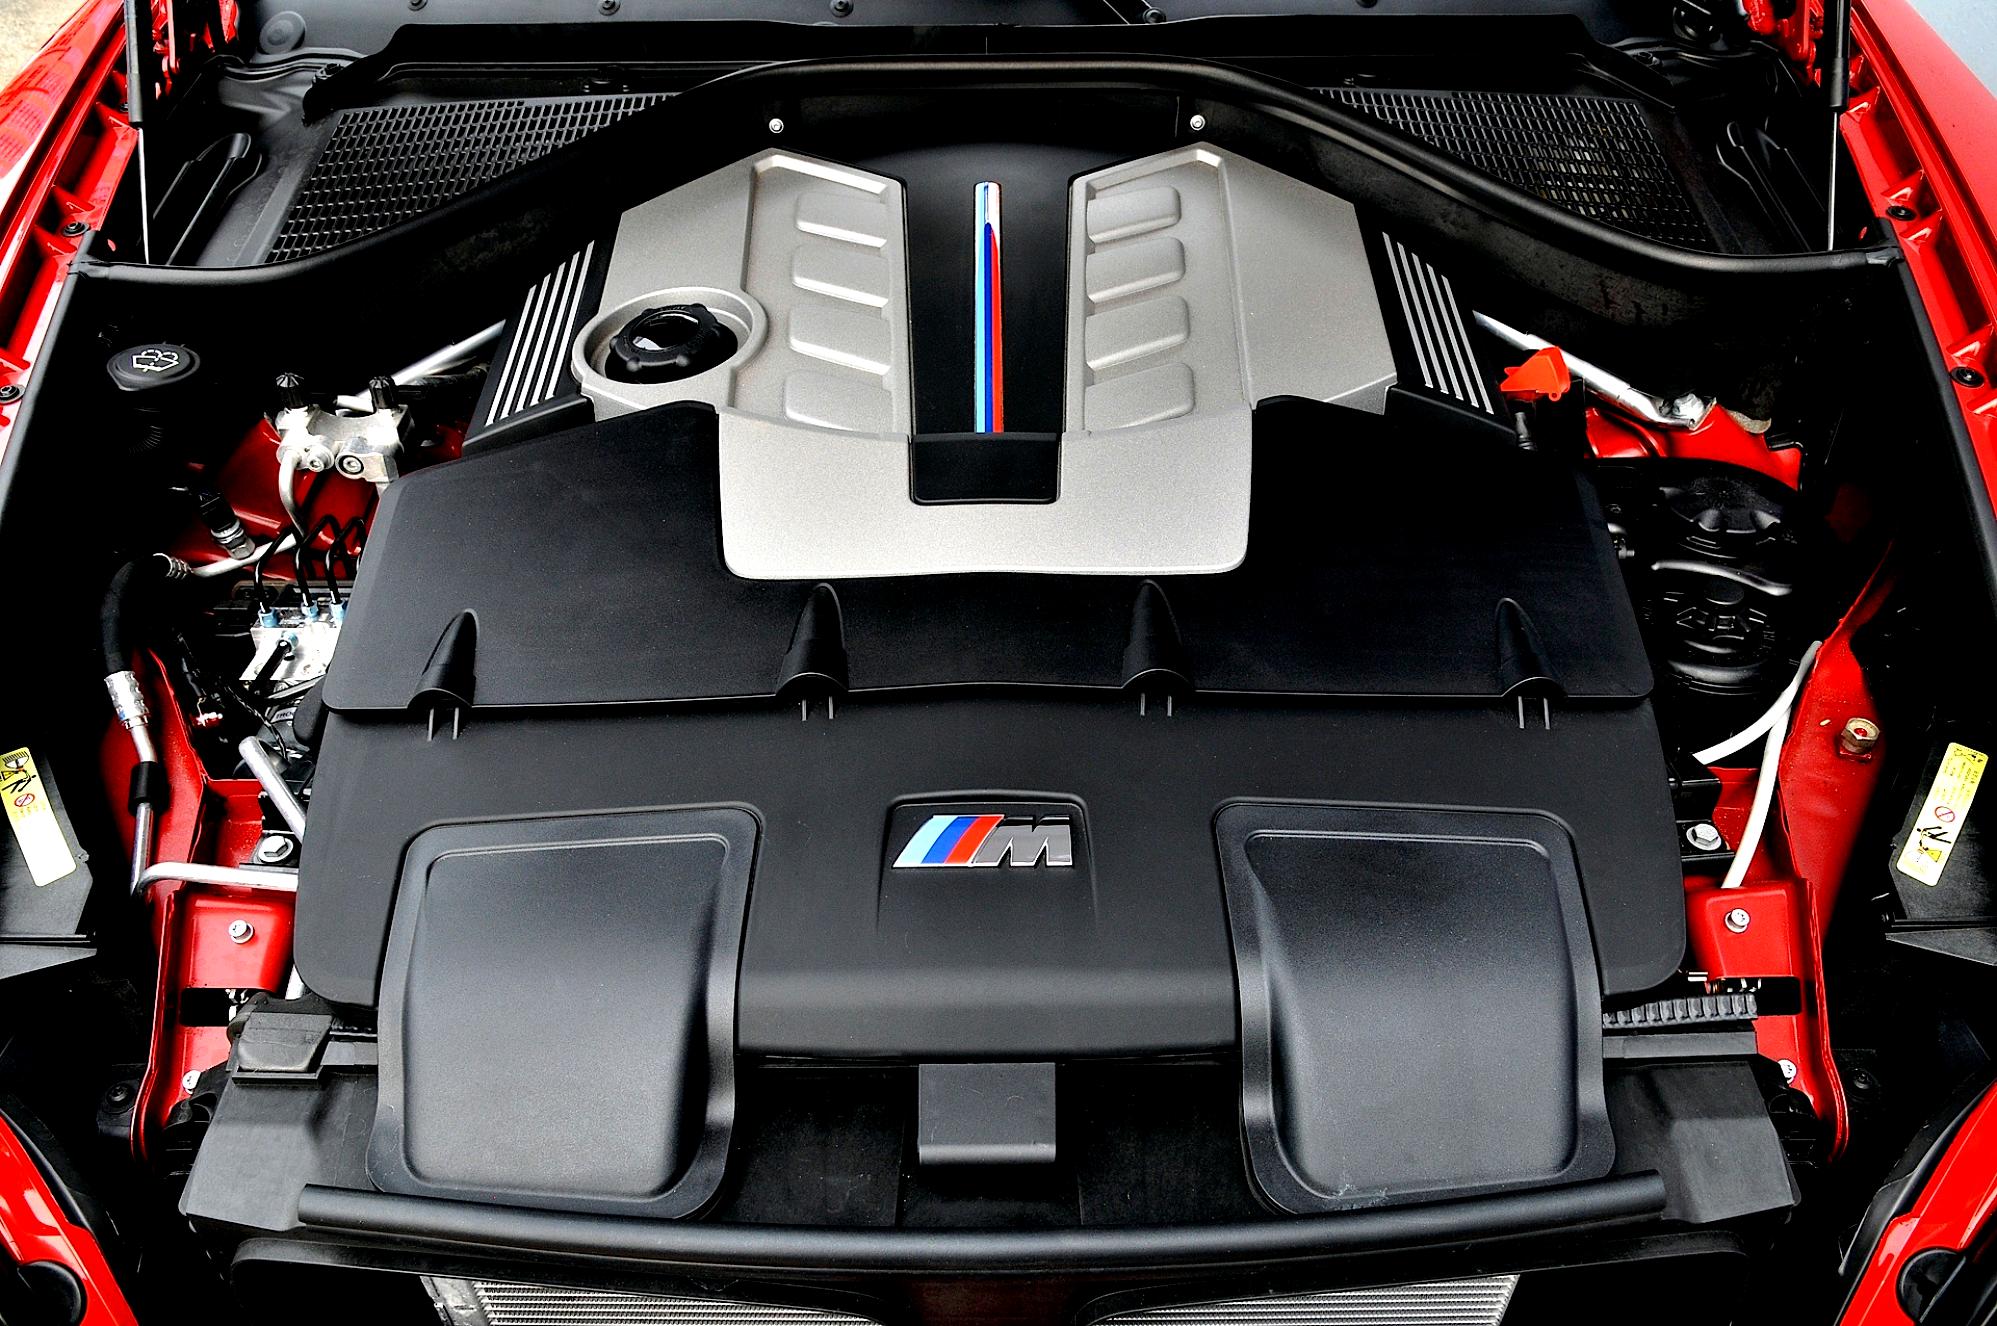 Bmw x6 двигатели. BMW x6m мотор. Двигатель БМВ x6 m. BMW x6 e71 под капотом. BMW x6 e71 двигатель.